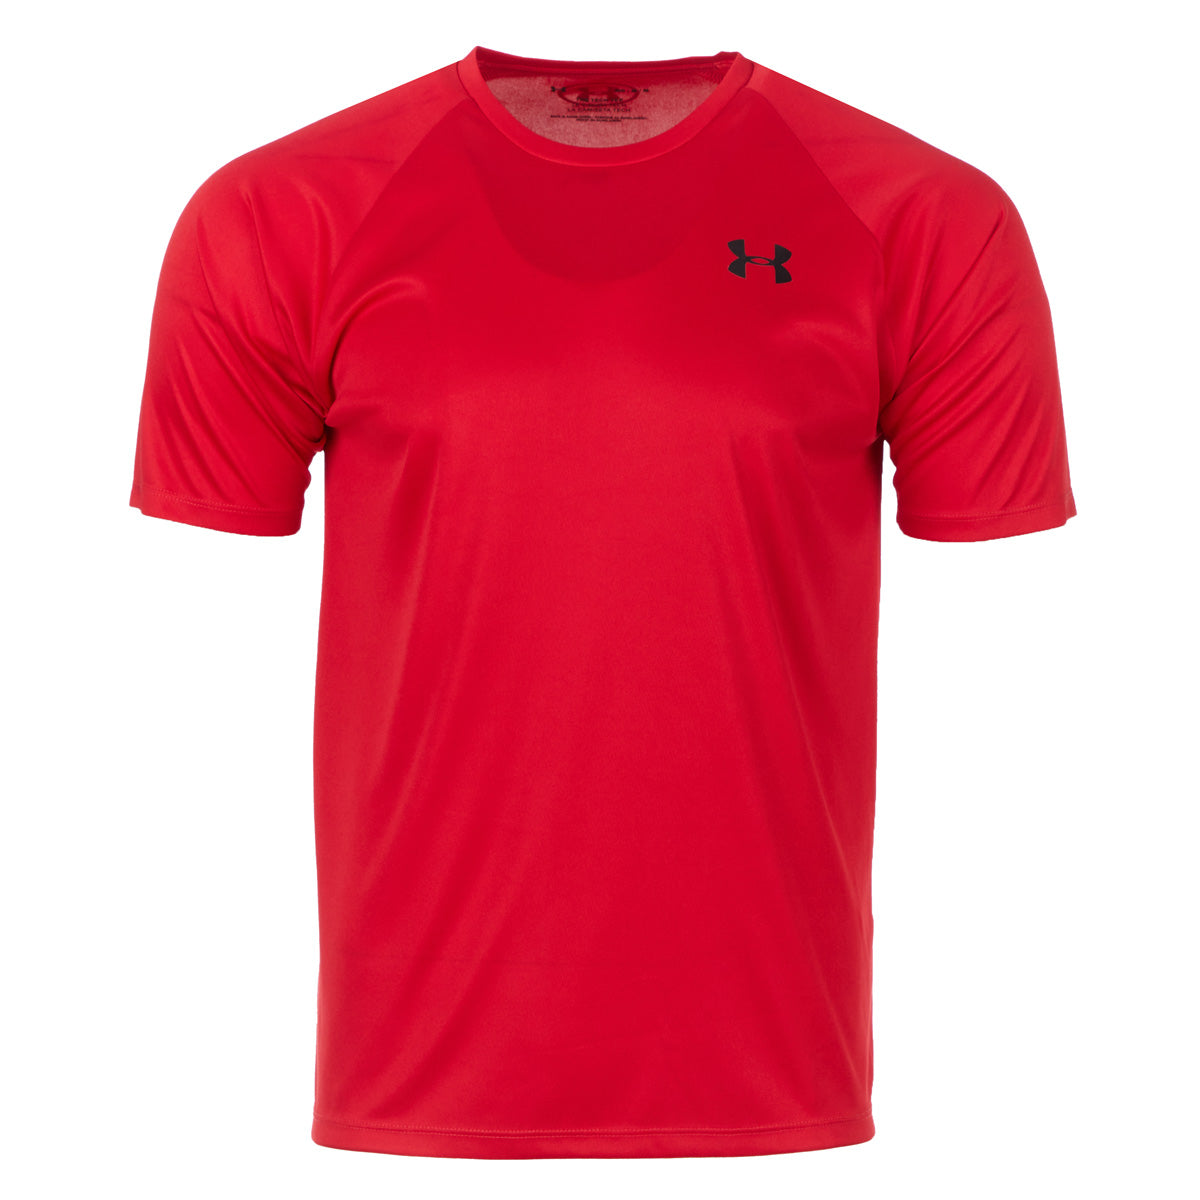 Image of Under Armour Men's Tech 2.0 Short Sleeve T-Shirt